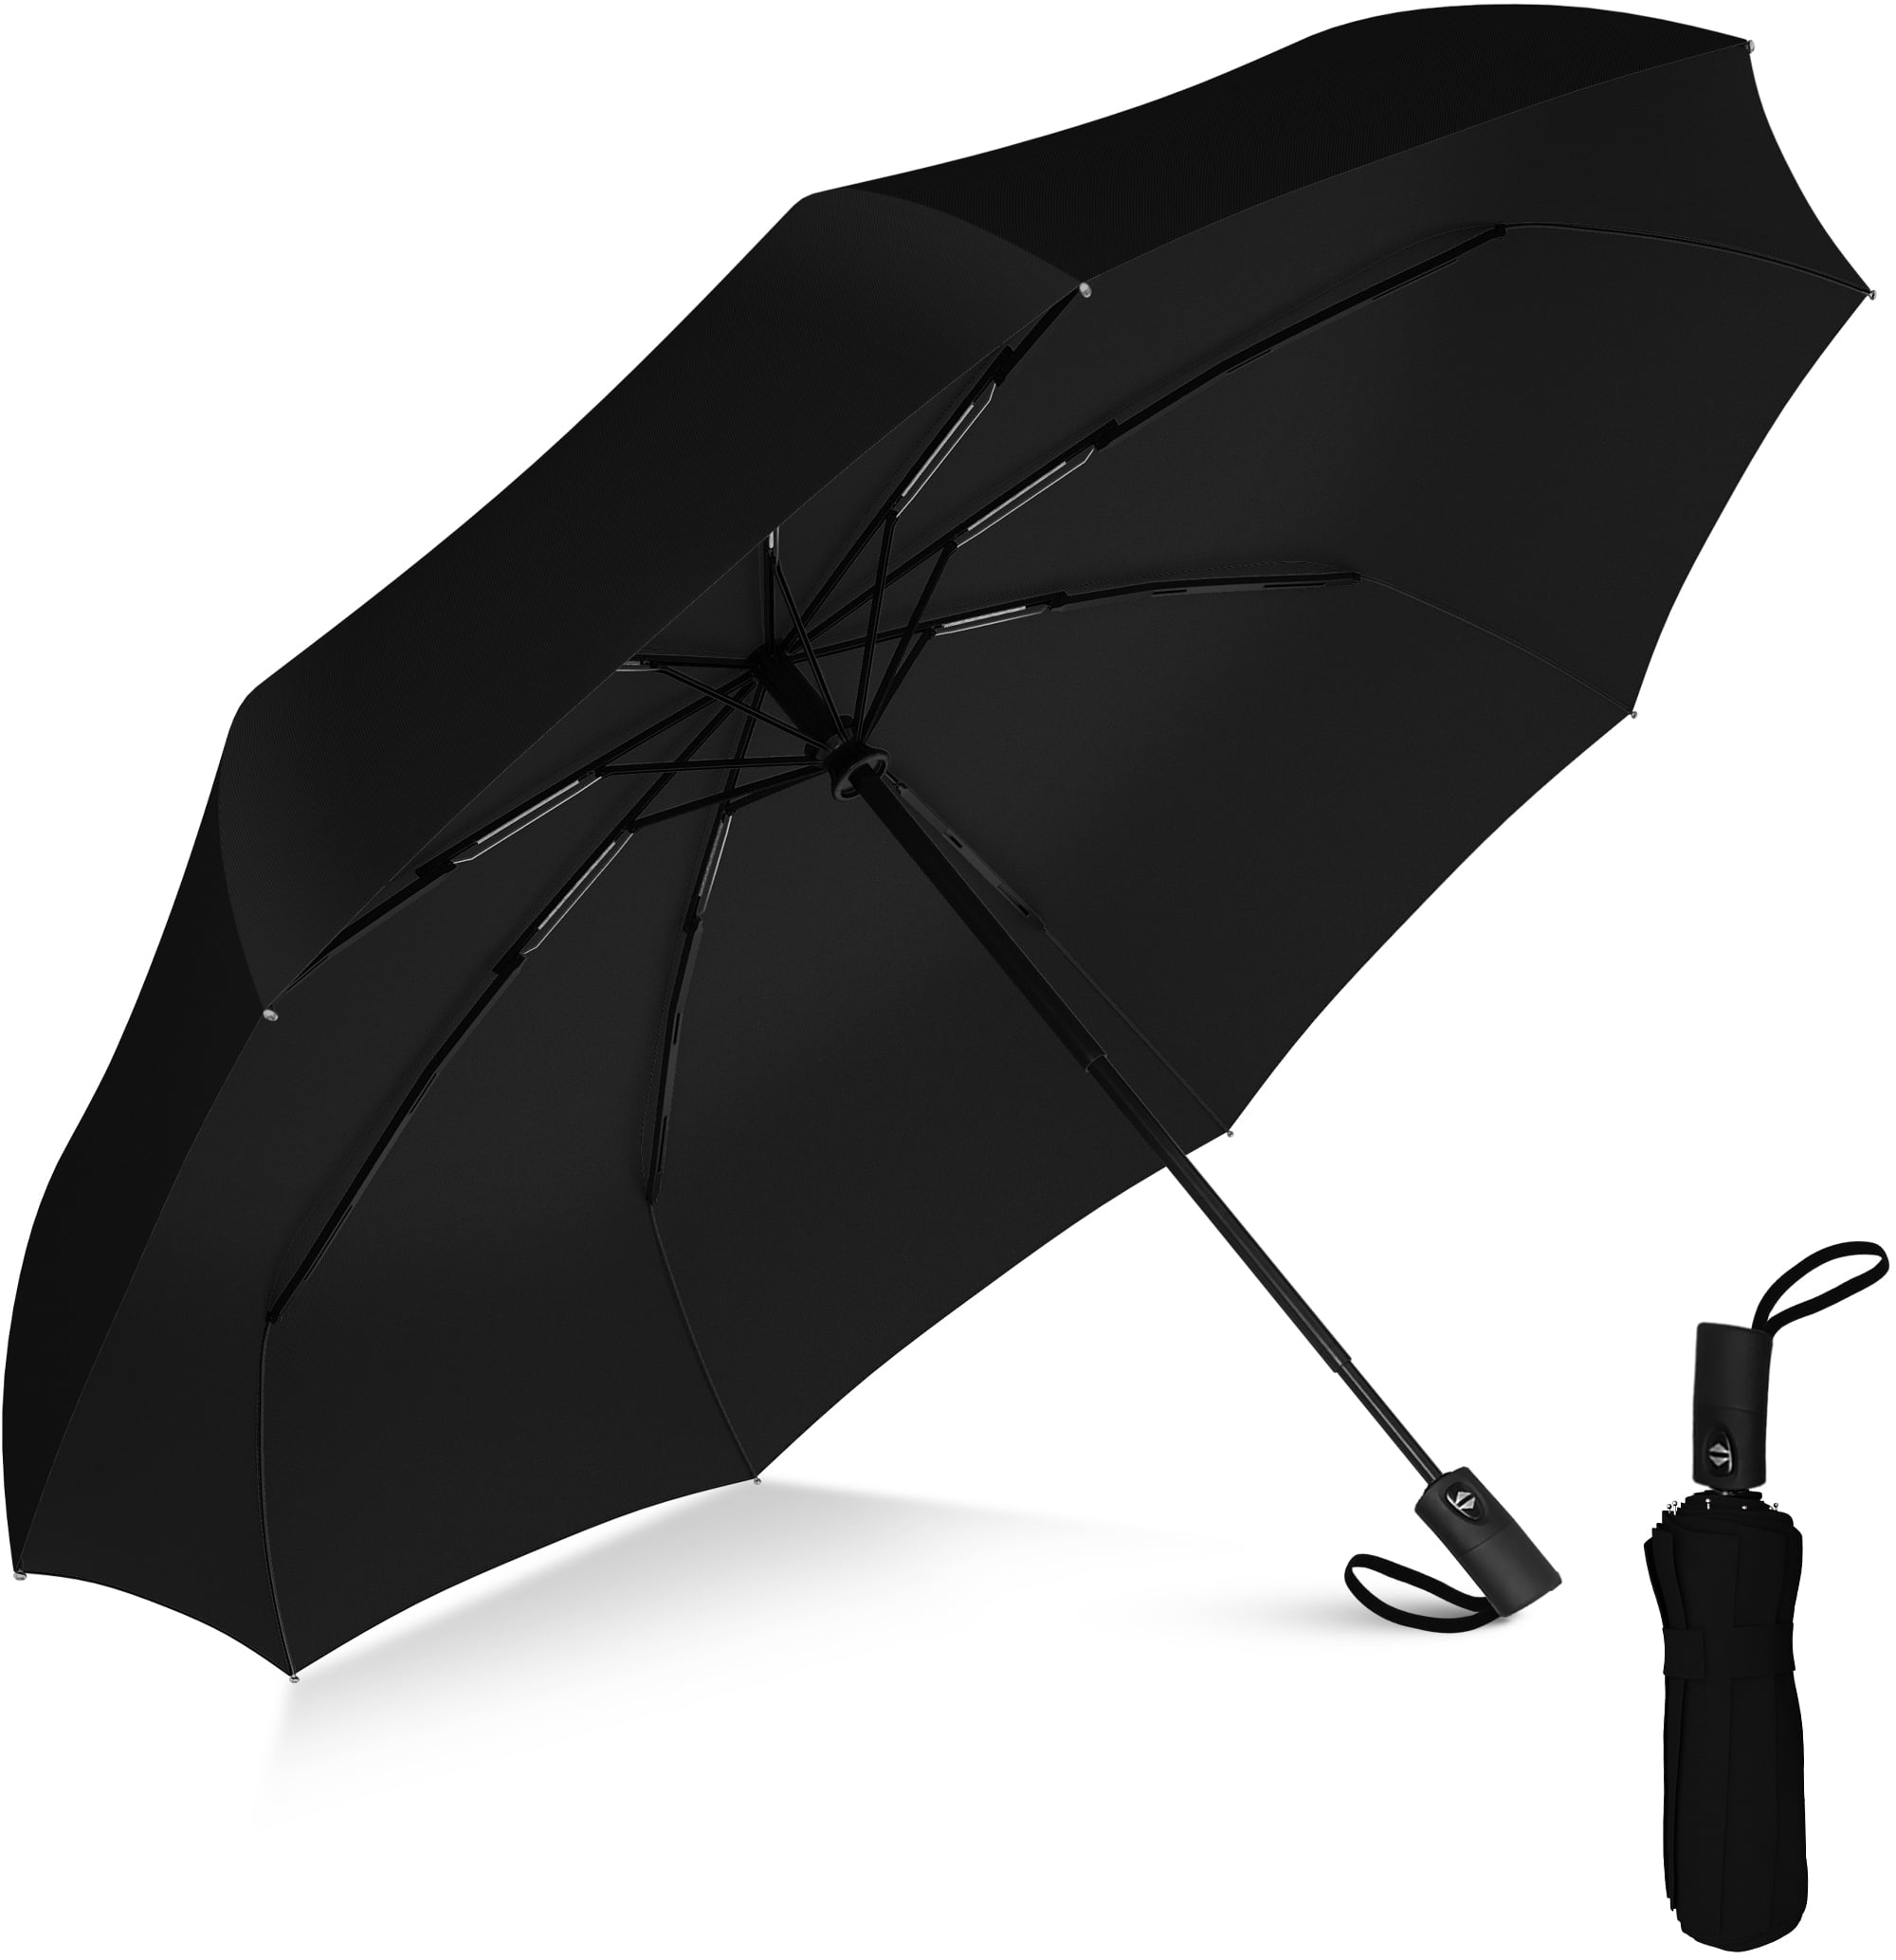 Folding Umbrella Compact Windproof Anti-UV Rain Sun Travel 10 Ribs Fit 3 